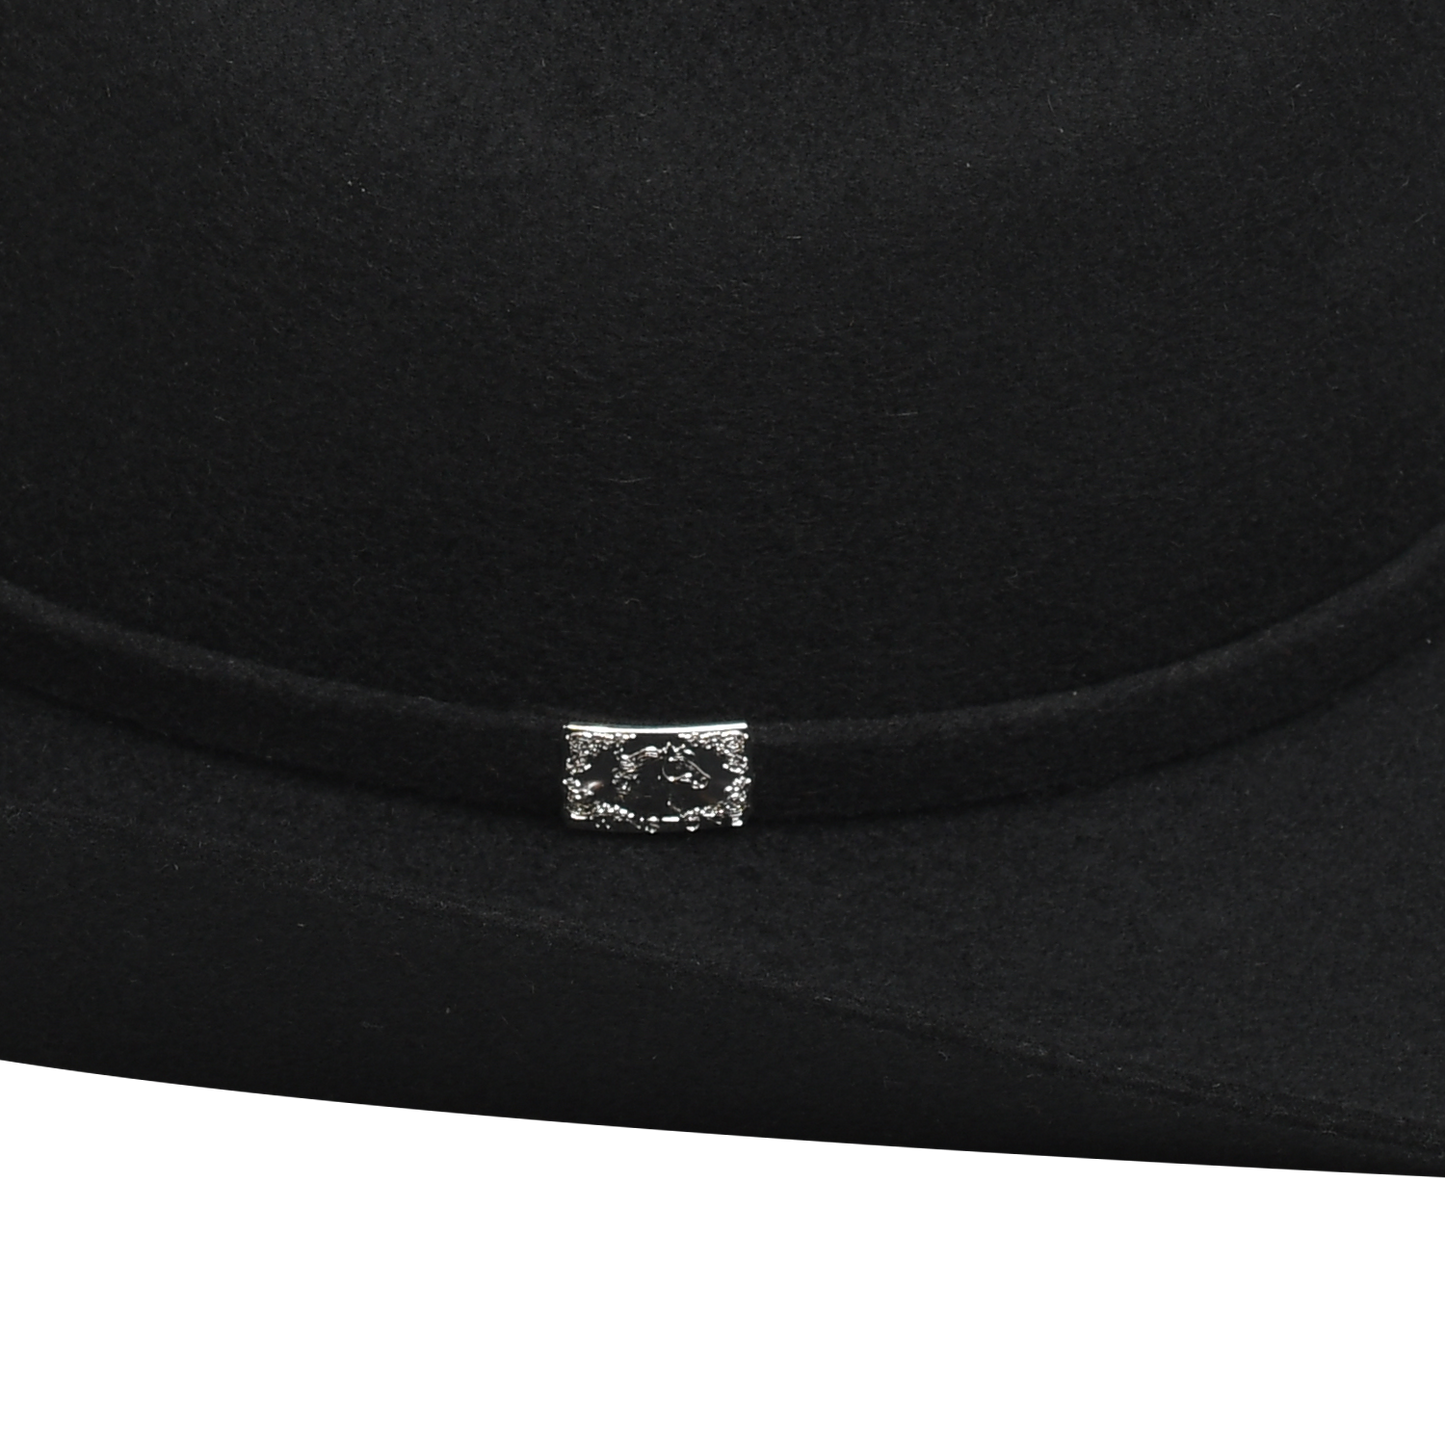 Twinstone Wool Cowboy Hat 4X Cattleman Black B-4" Texas